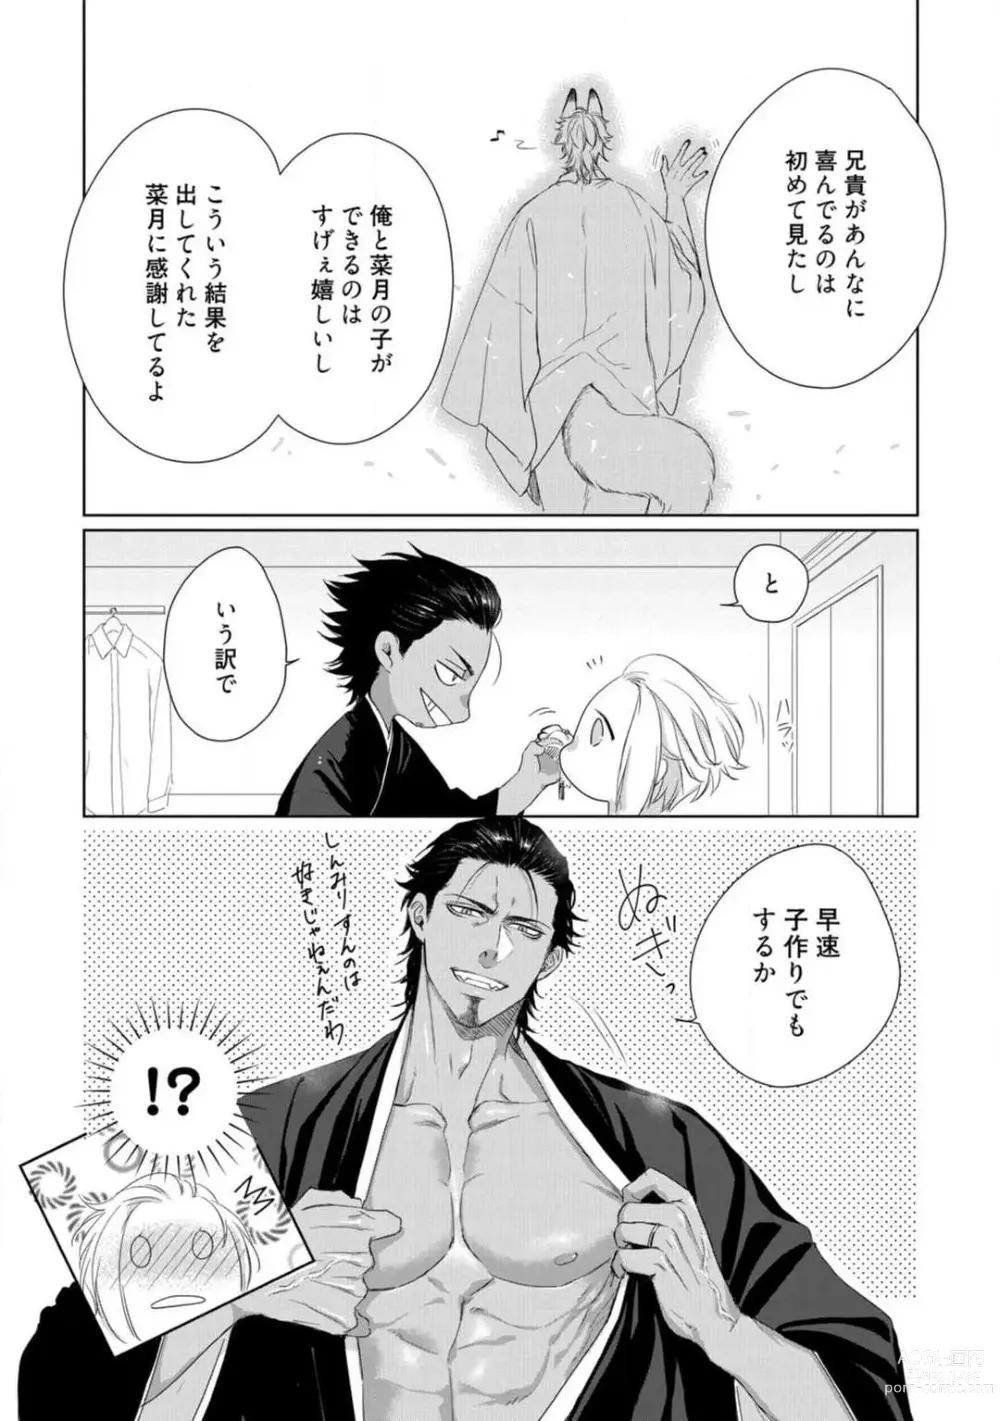 Page 329 of manga Kamidanomi Konkatsu 1-12